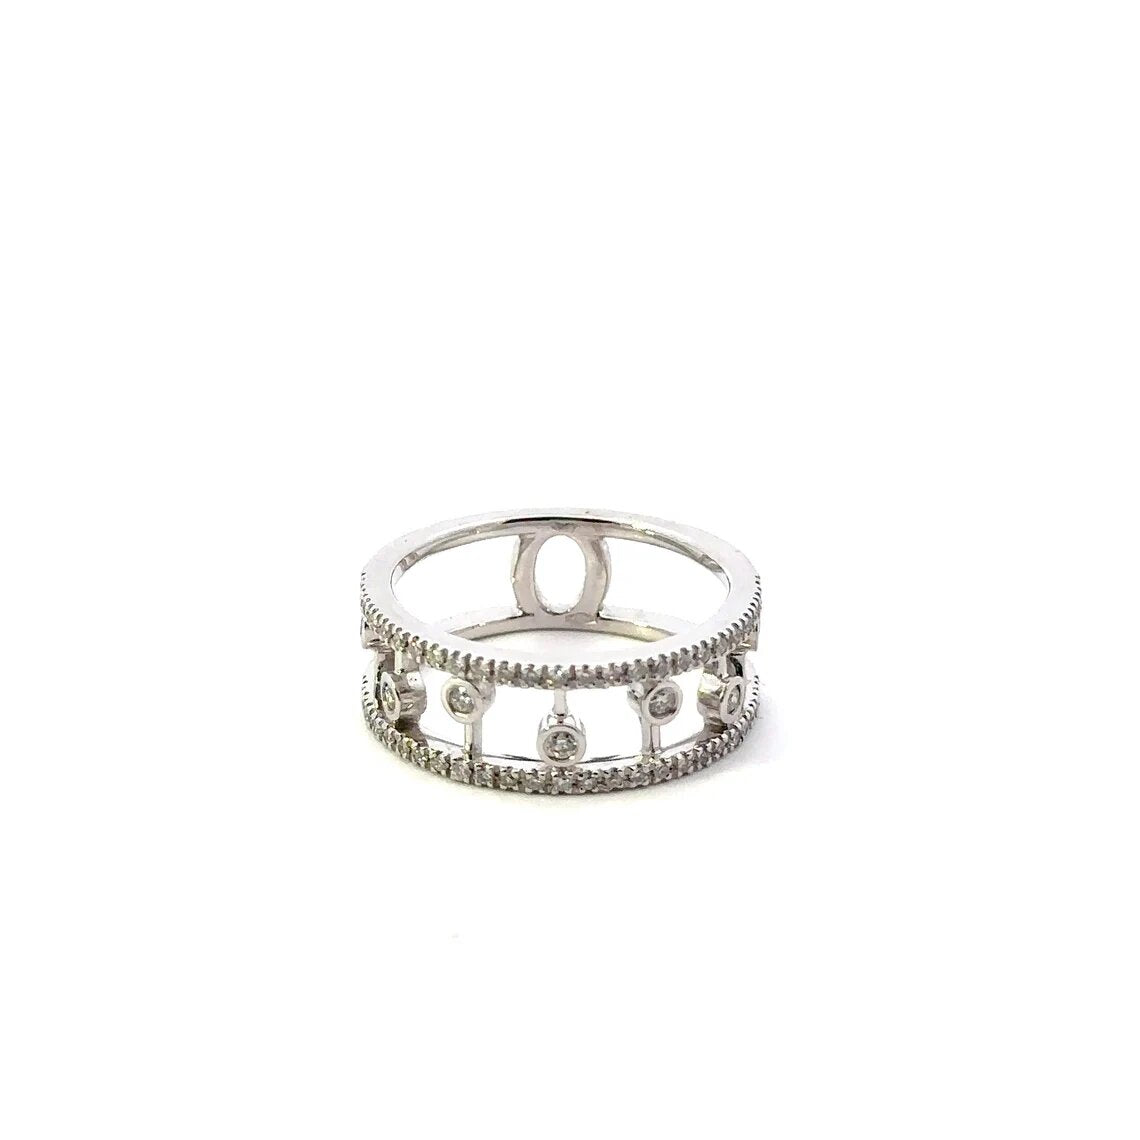 Dewdrop Band Diamond Ring: 18k White Gold